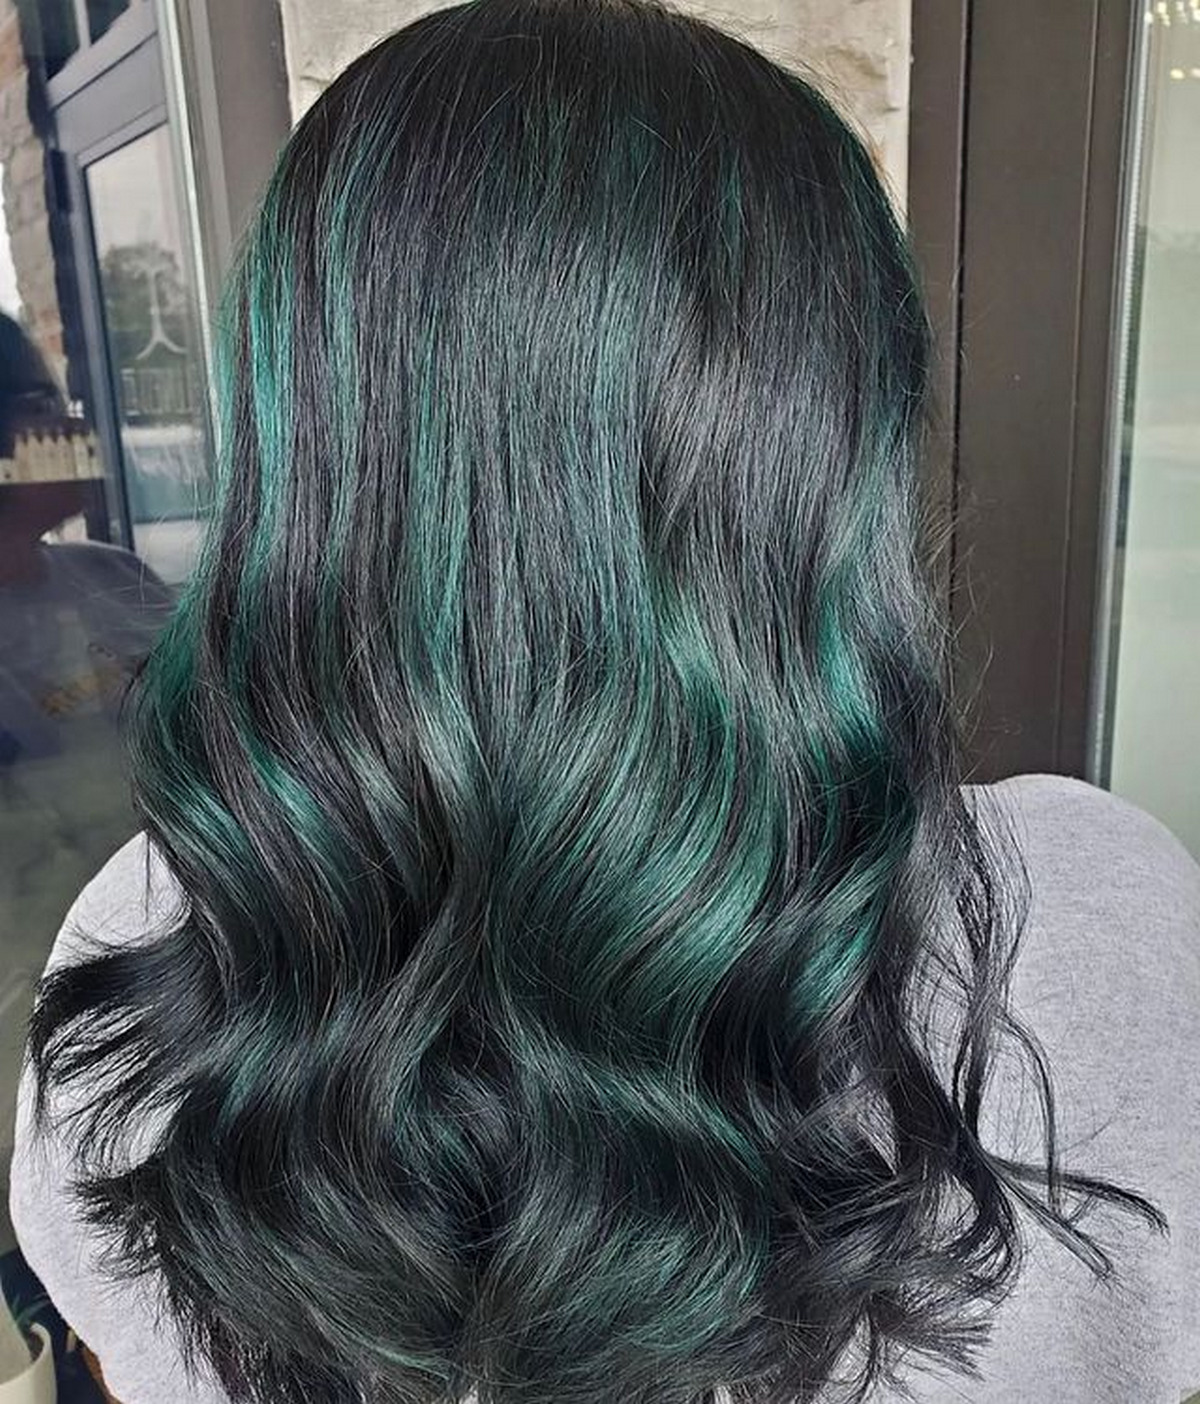 Black Hair And Green Highlights